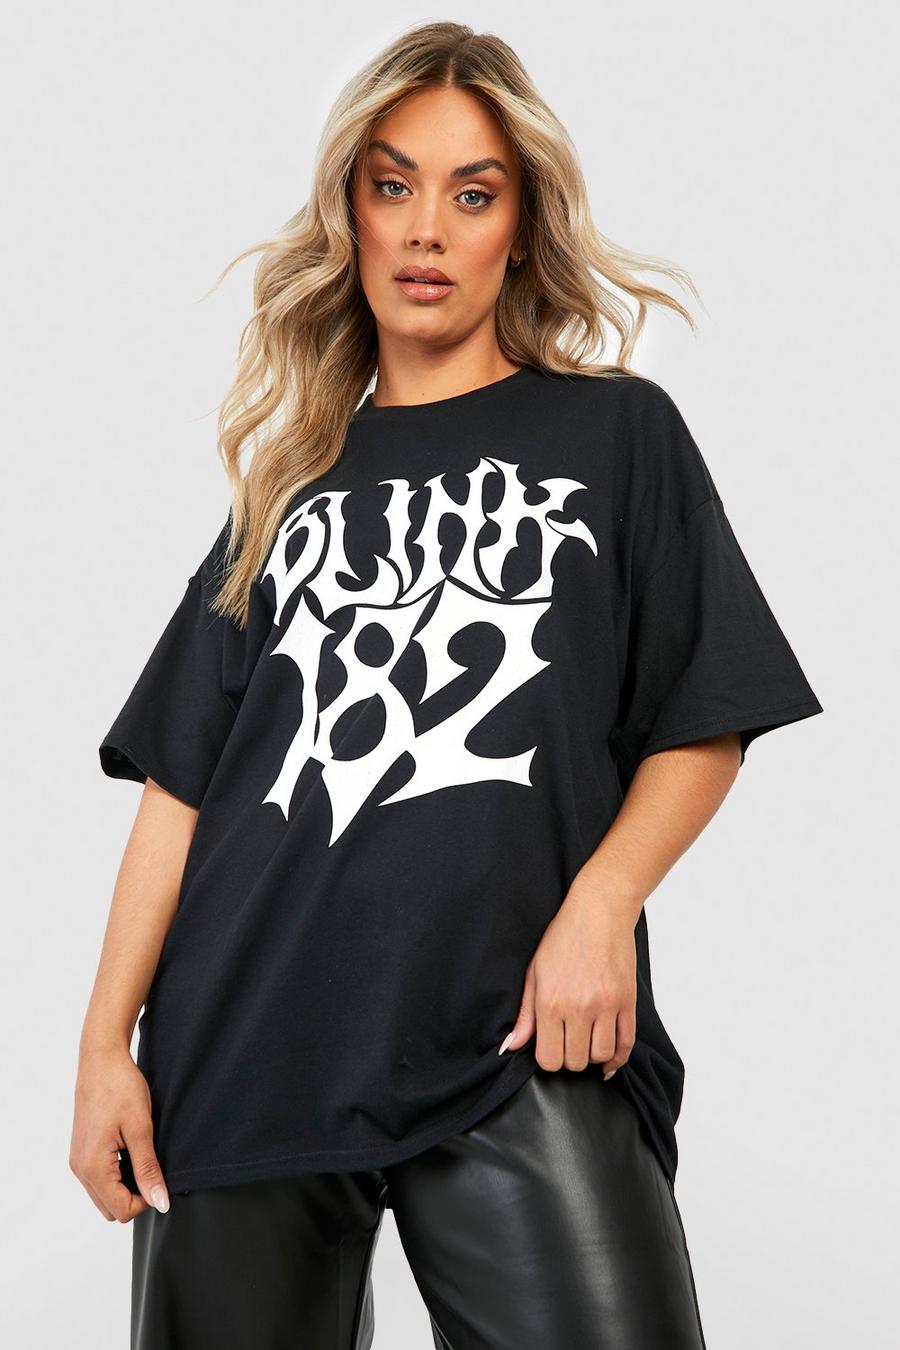 T-shirt Plus Size oversize ufficiale Blink 182, Black nero